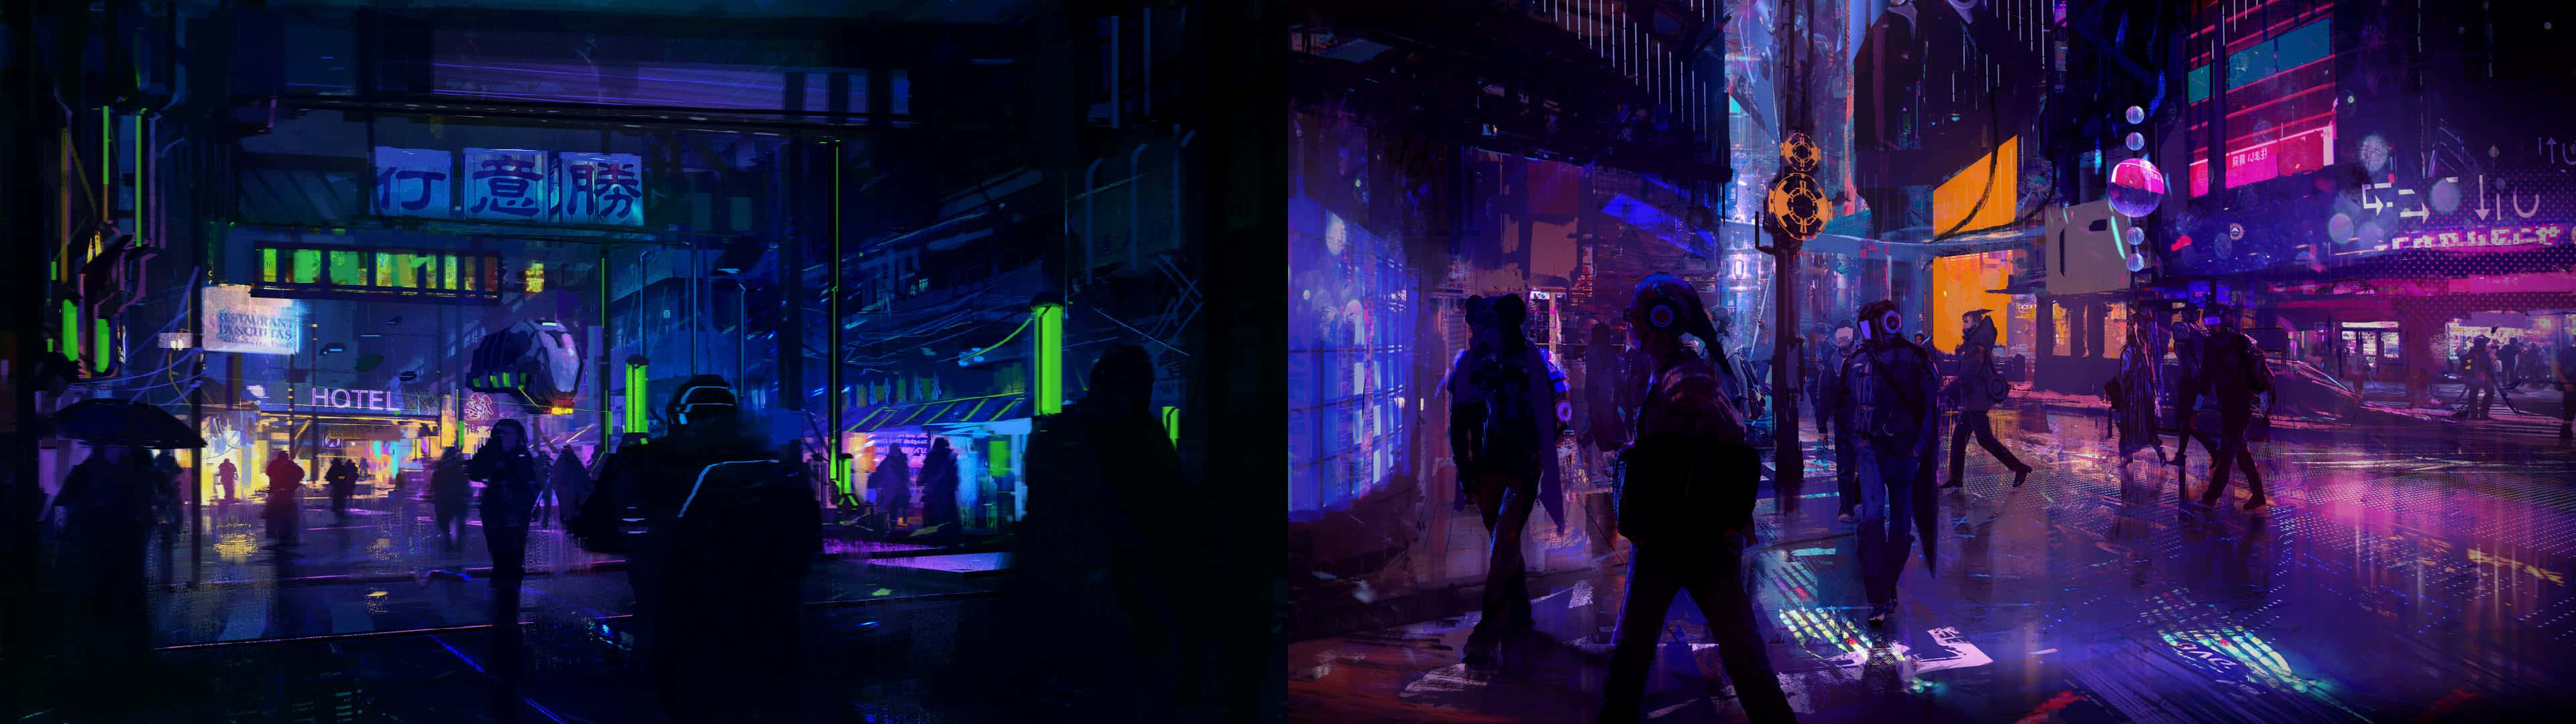 Cool Monitor City Neon Aesthetic Wallpaper